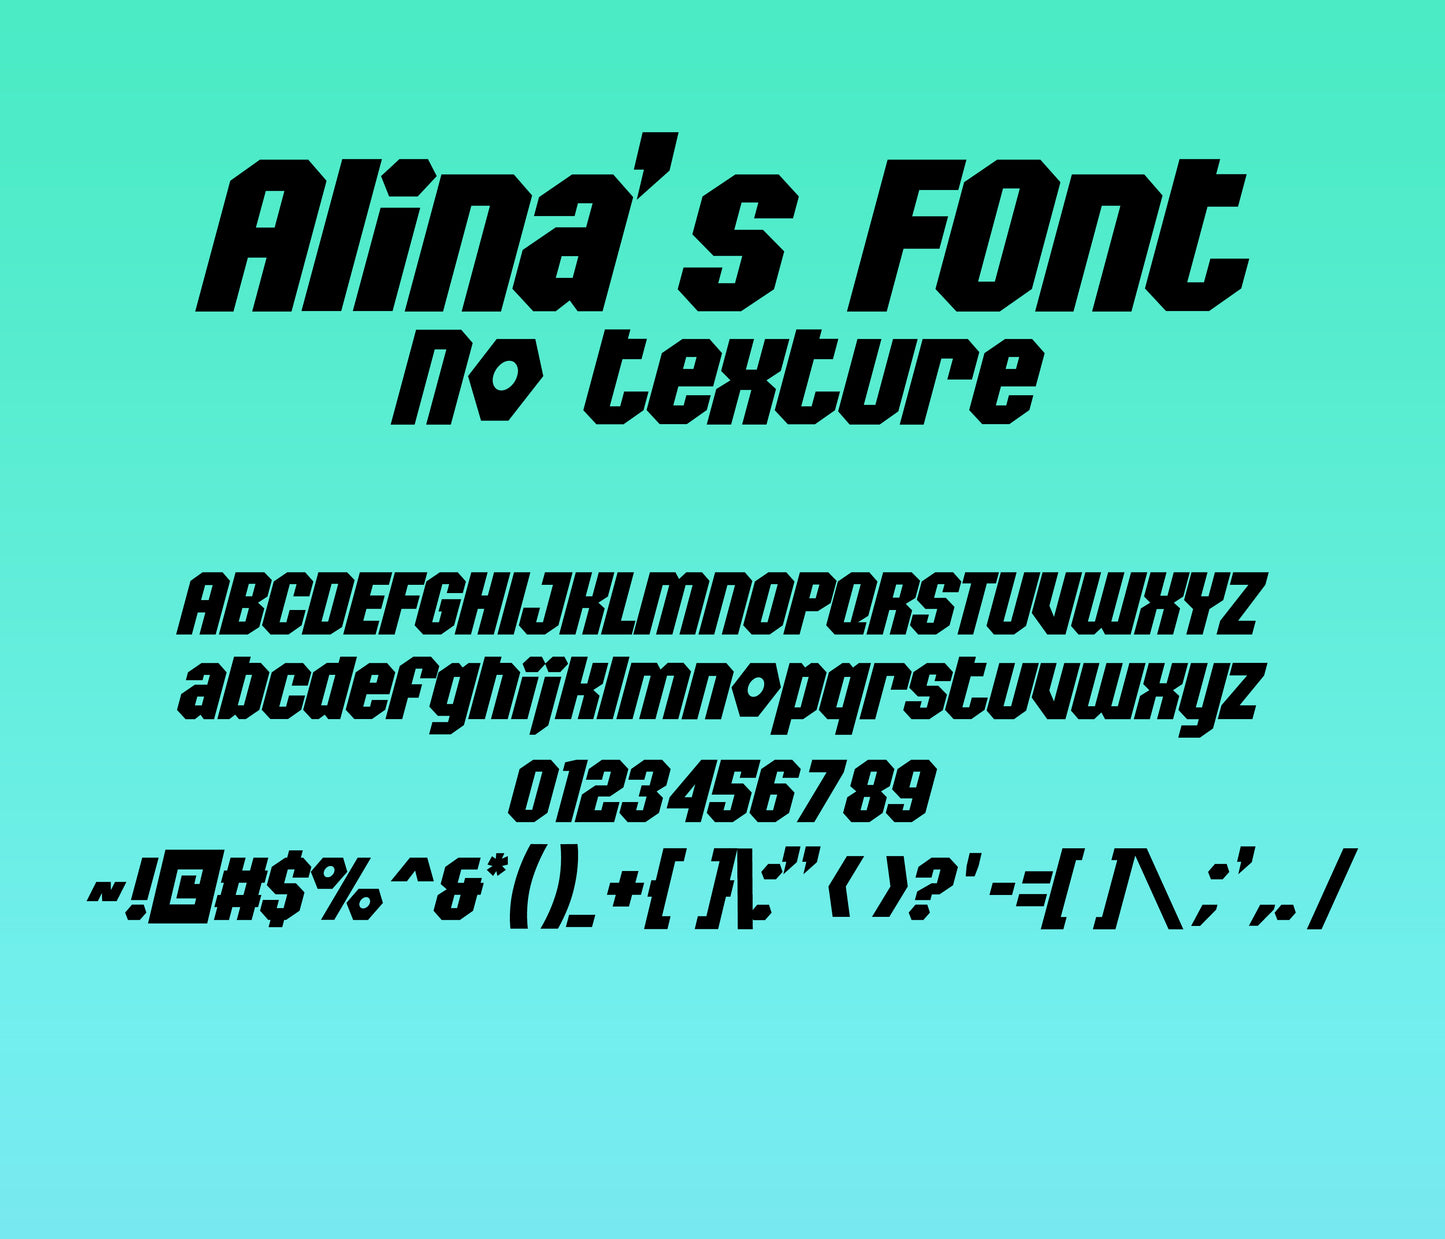 Boruto Textured Font